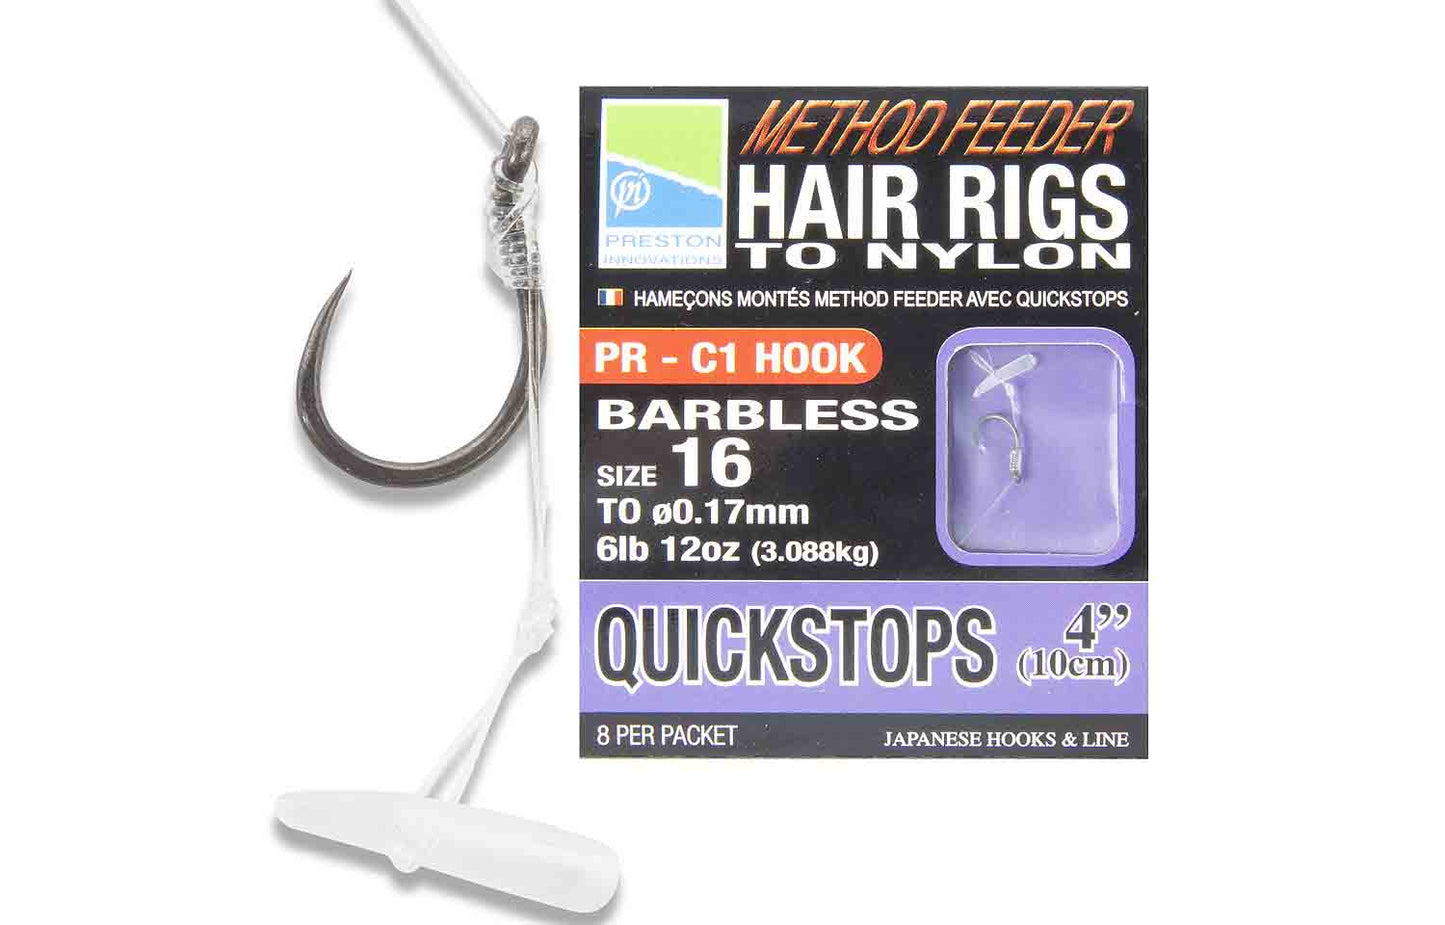 Preston Innovations Method Feeder Hair Rigs To Nylon With Quickstops